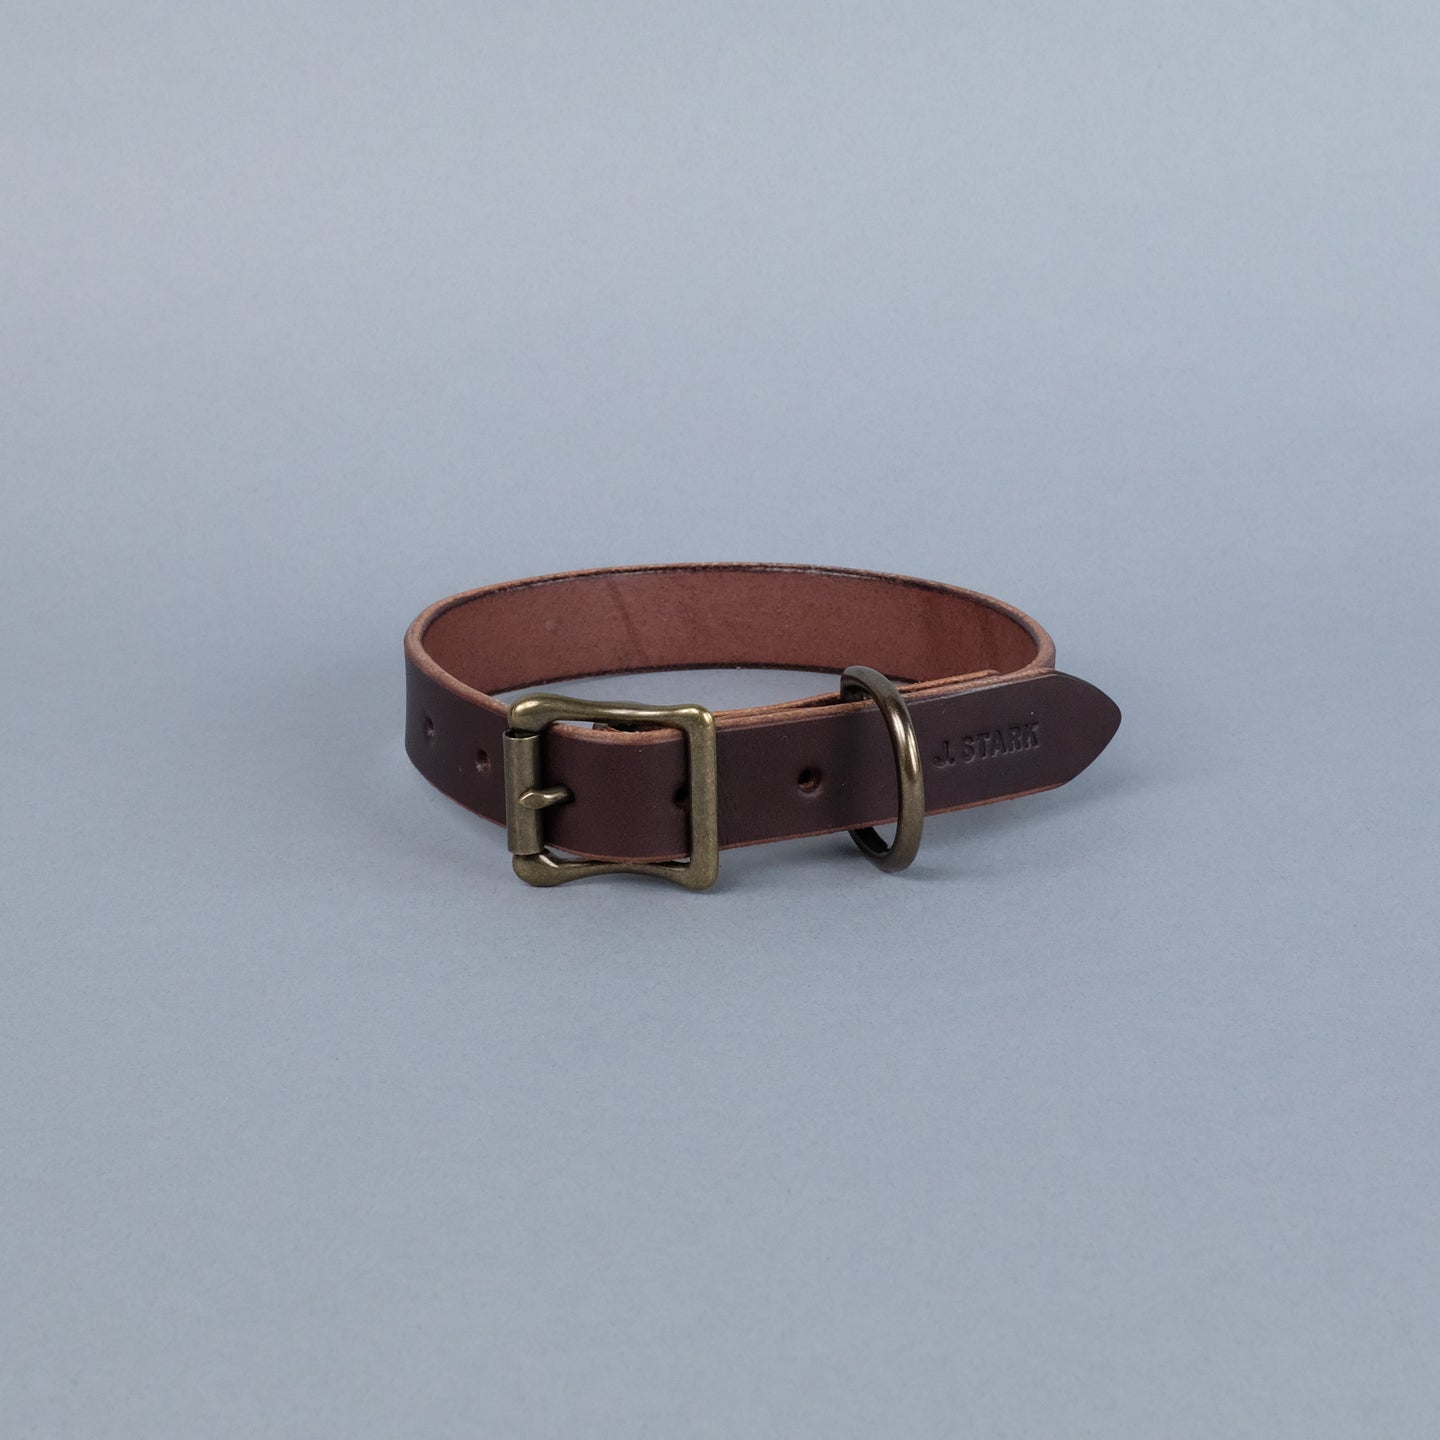 Seymour Dog Collar Standard - Dark Brown